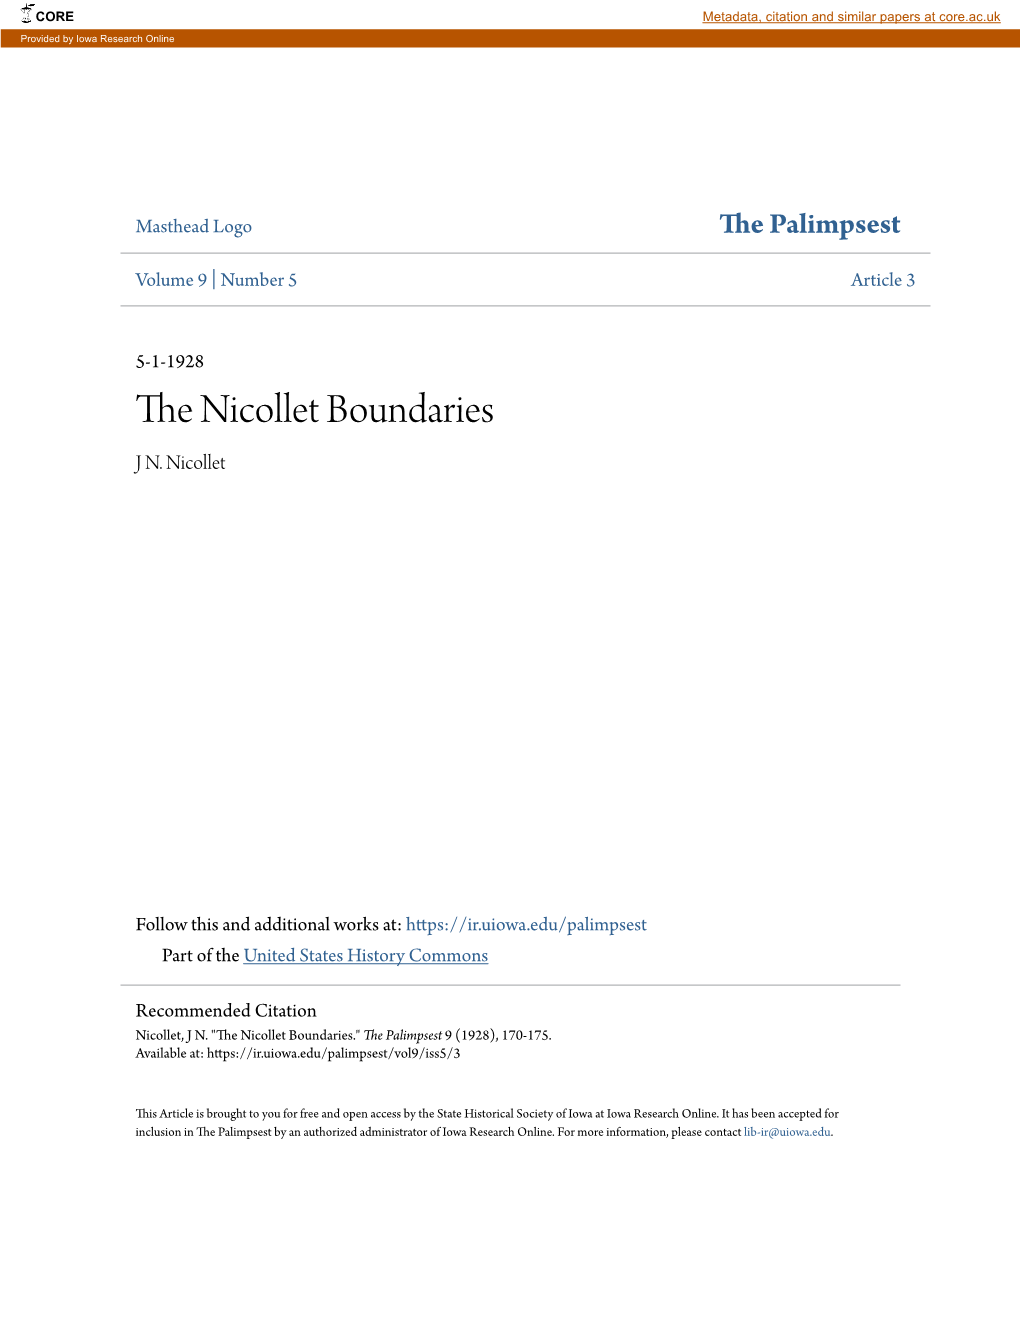 The Nicollet Boundaries